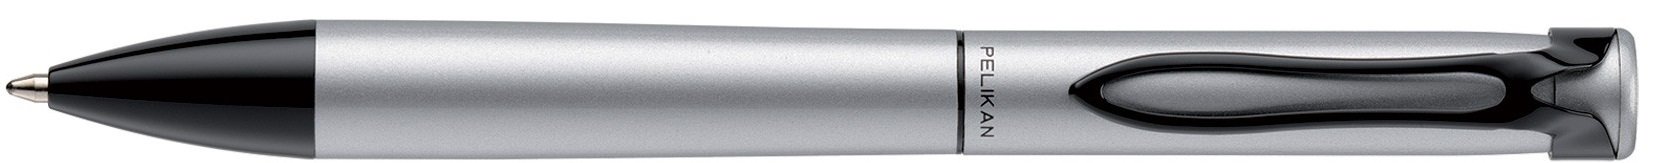 Ручка шариковая Pelikan Stola 3, Silver/Black, подарочная коробка